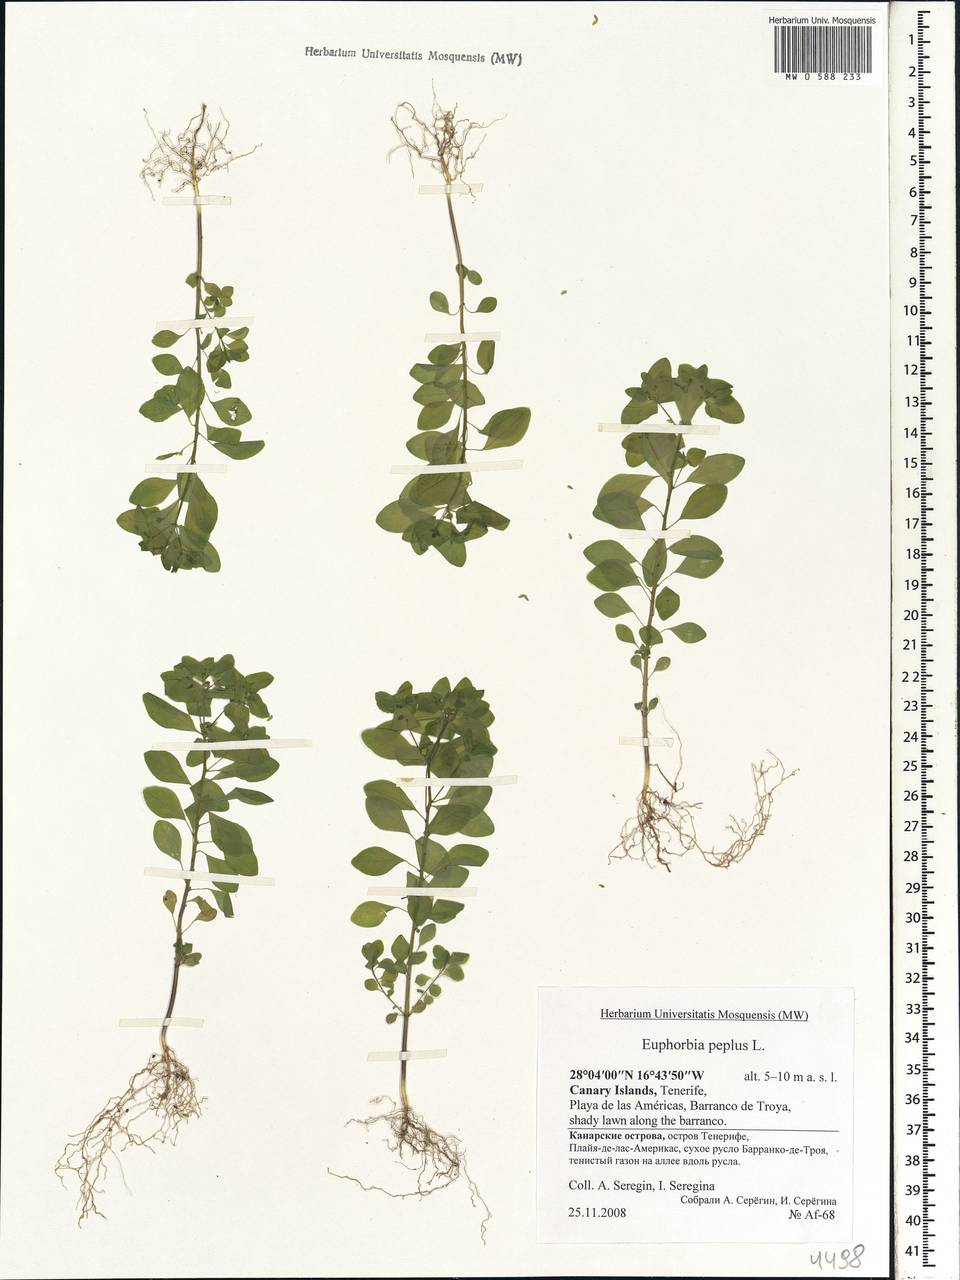 Euphorbia peplus L., Africa (AFR) (Spain)